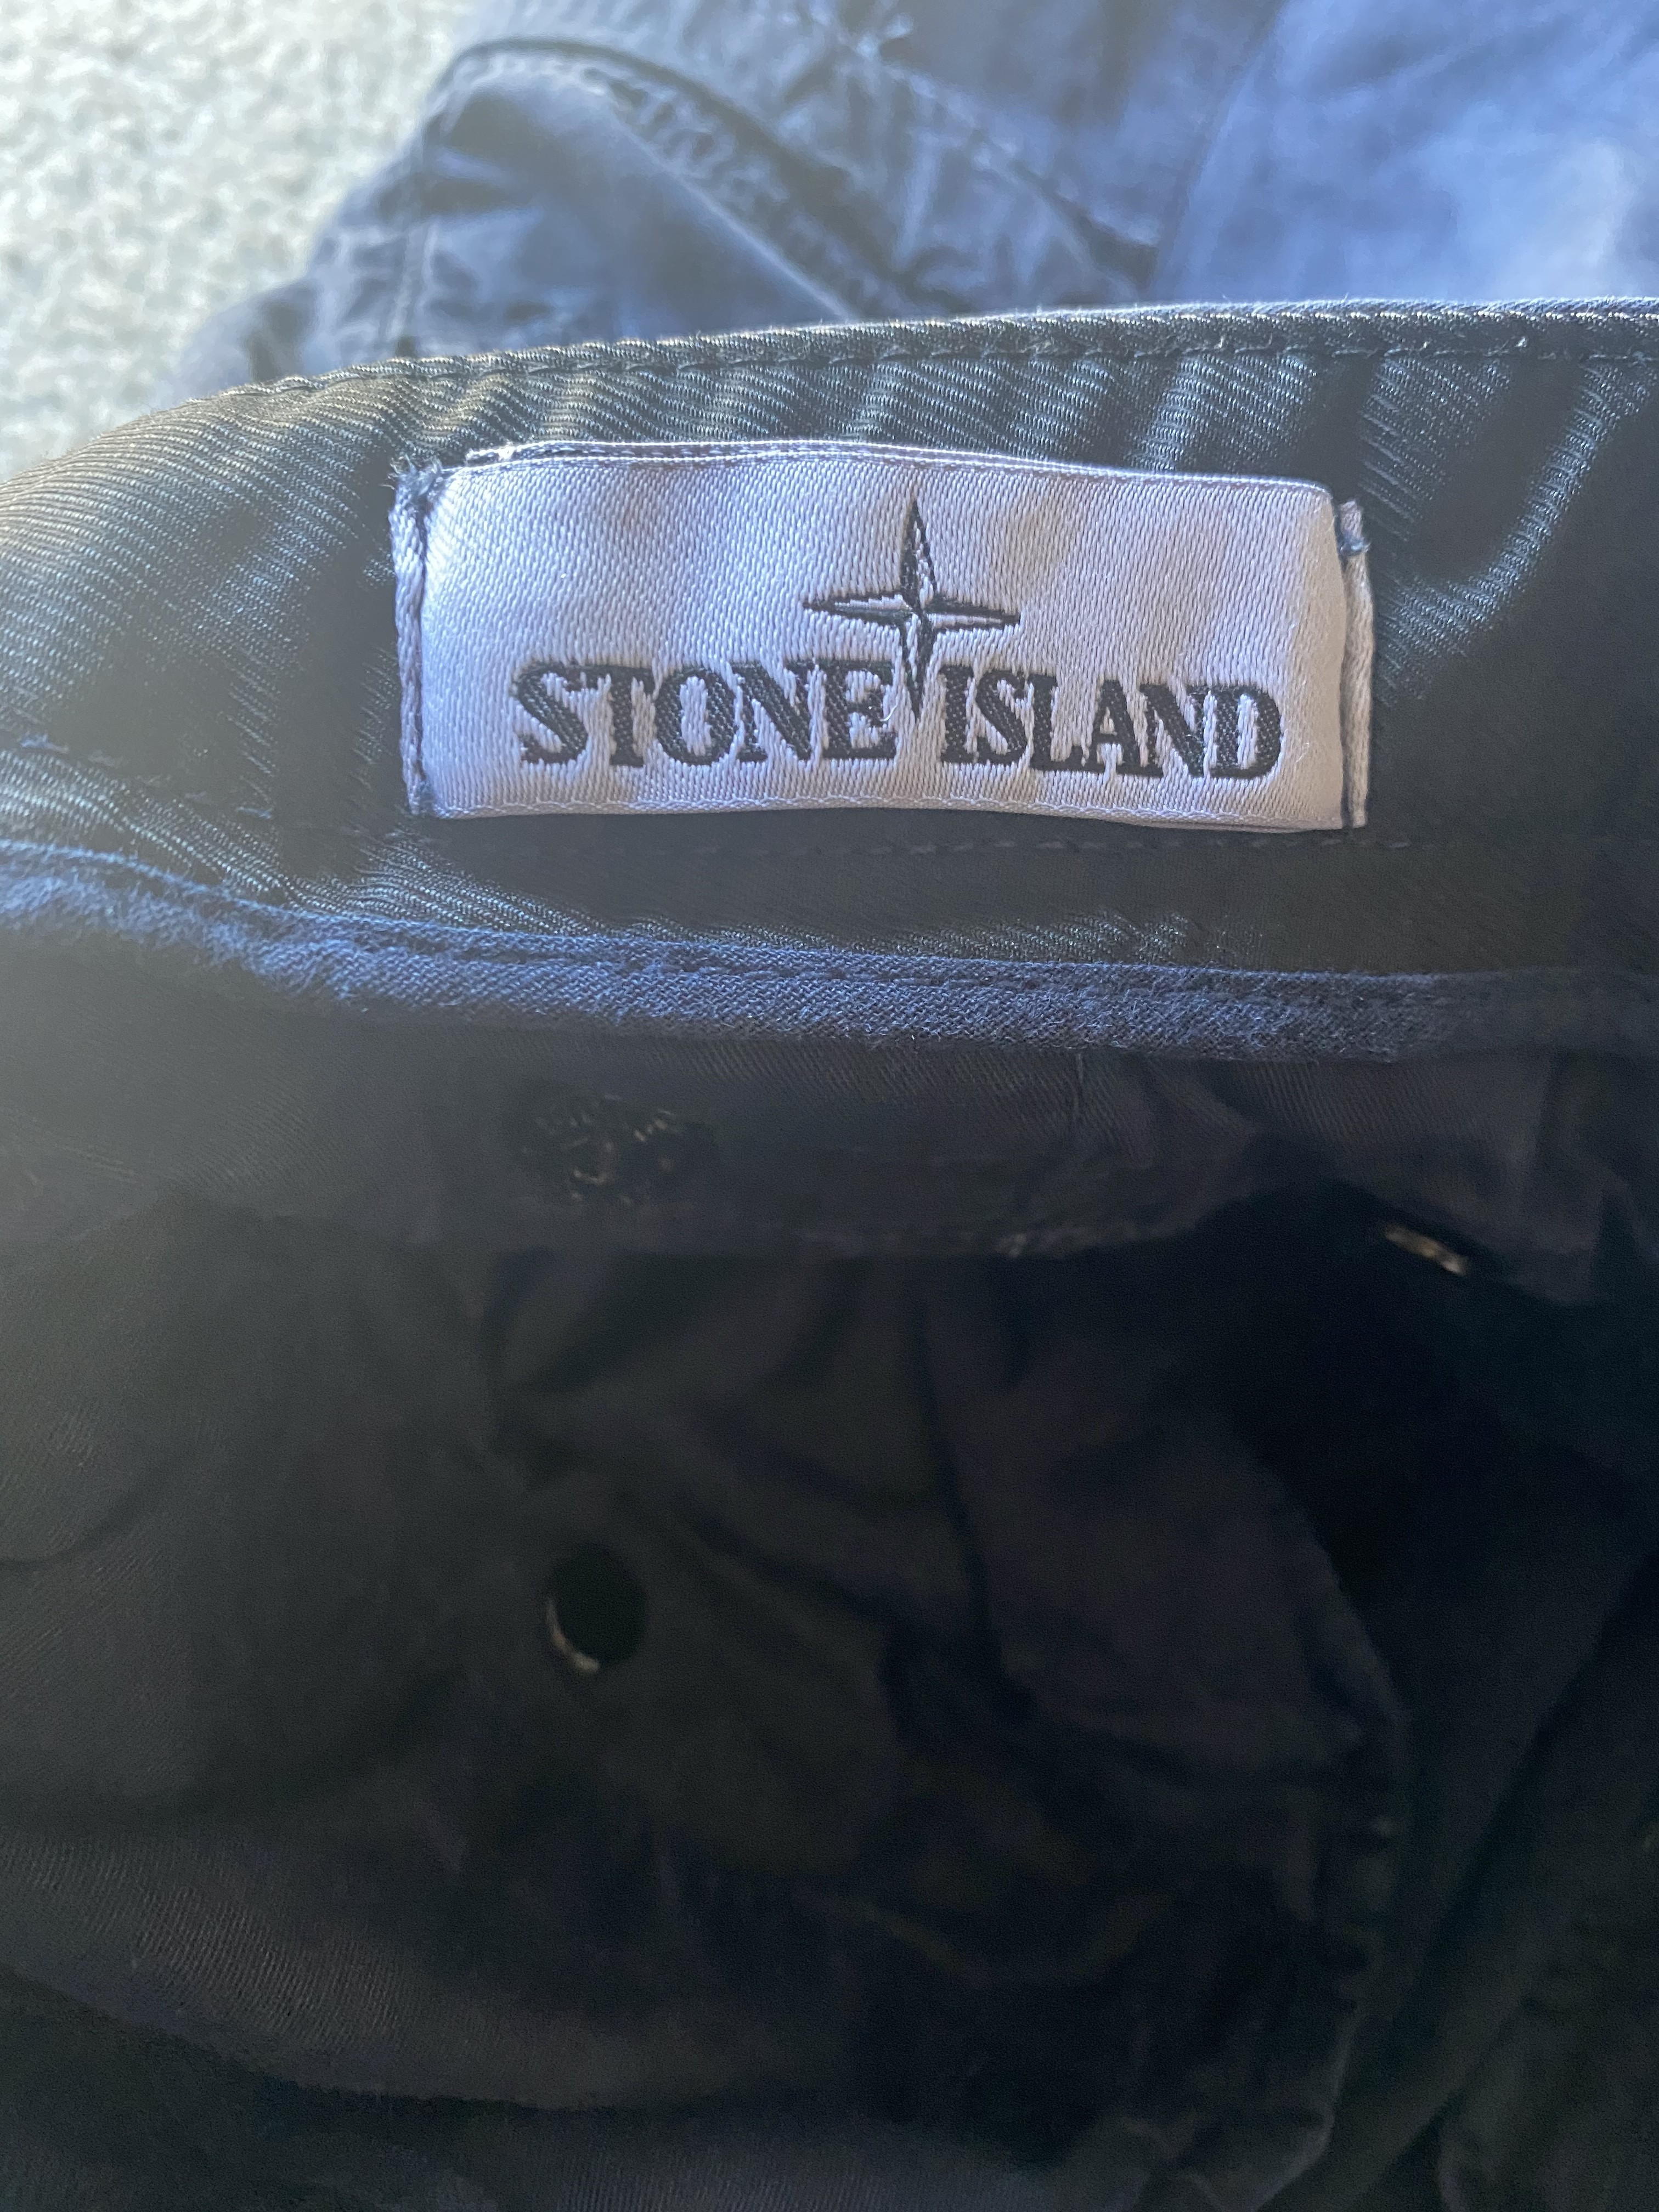 Stone island navy cargo pants - 7